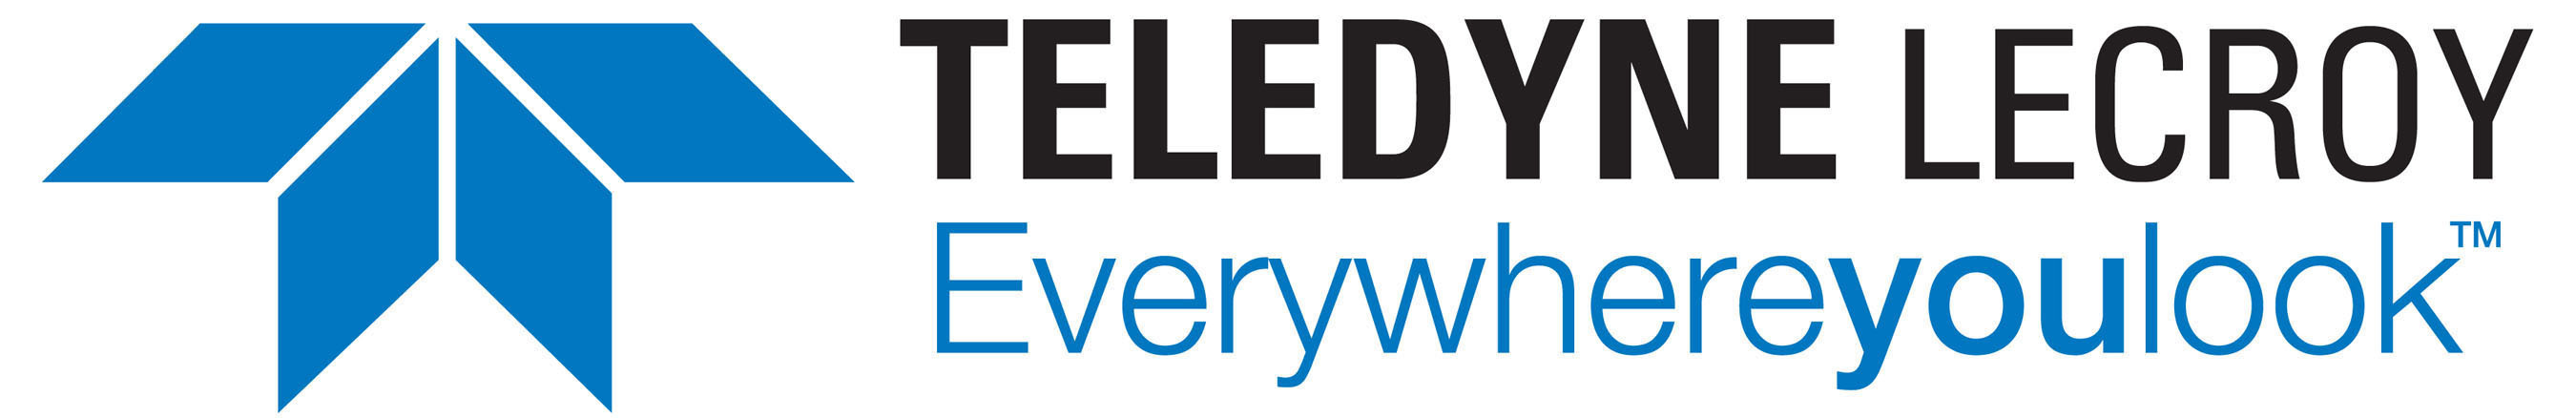 Teledyne lecroy logo